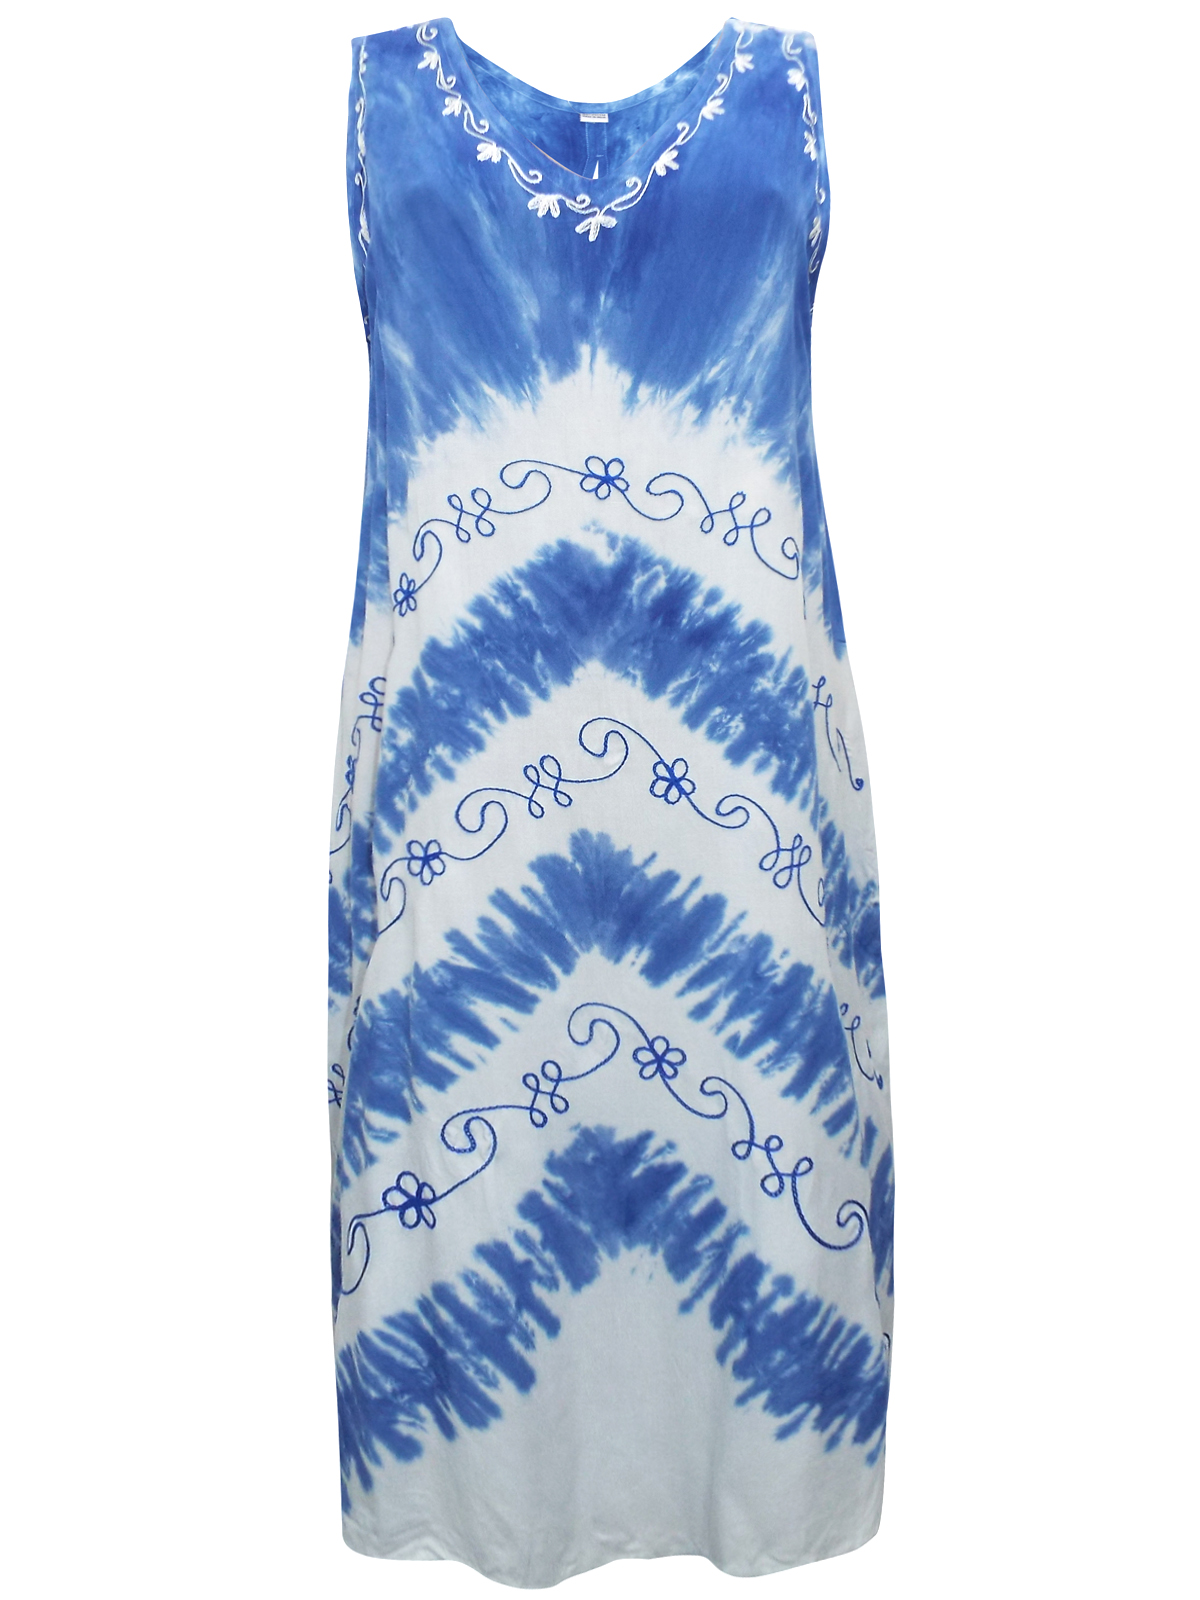 LIGHT-BLUE Tie Dye Embroidered Beach Dress - FreeSize